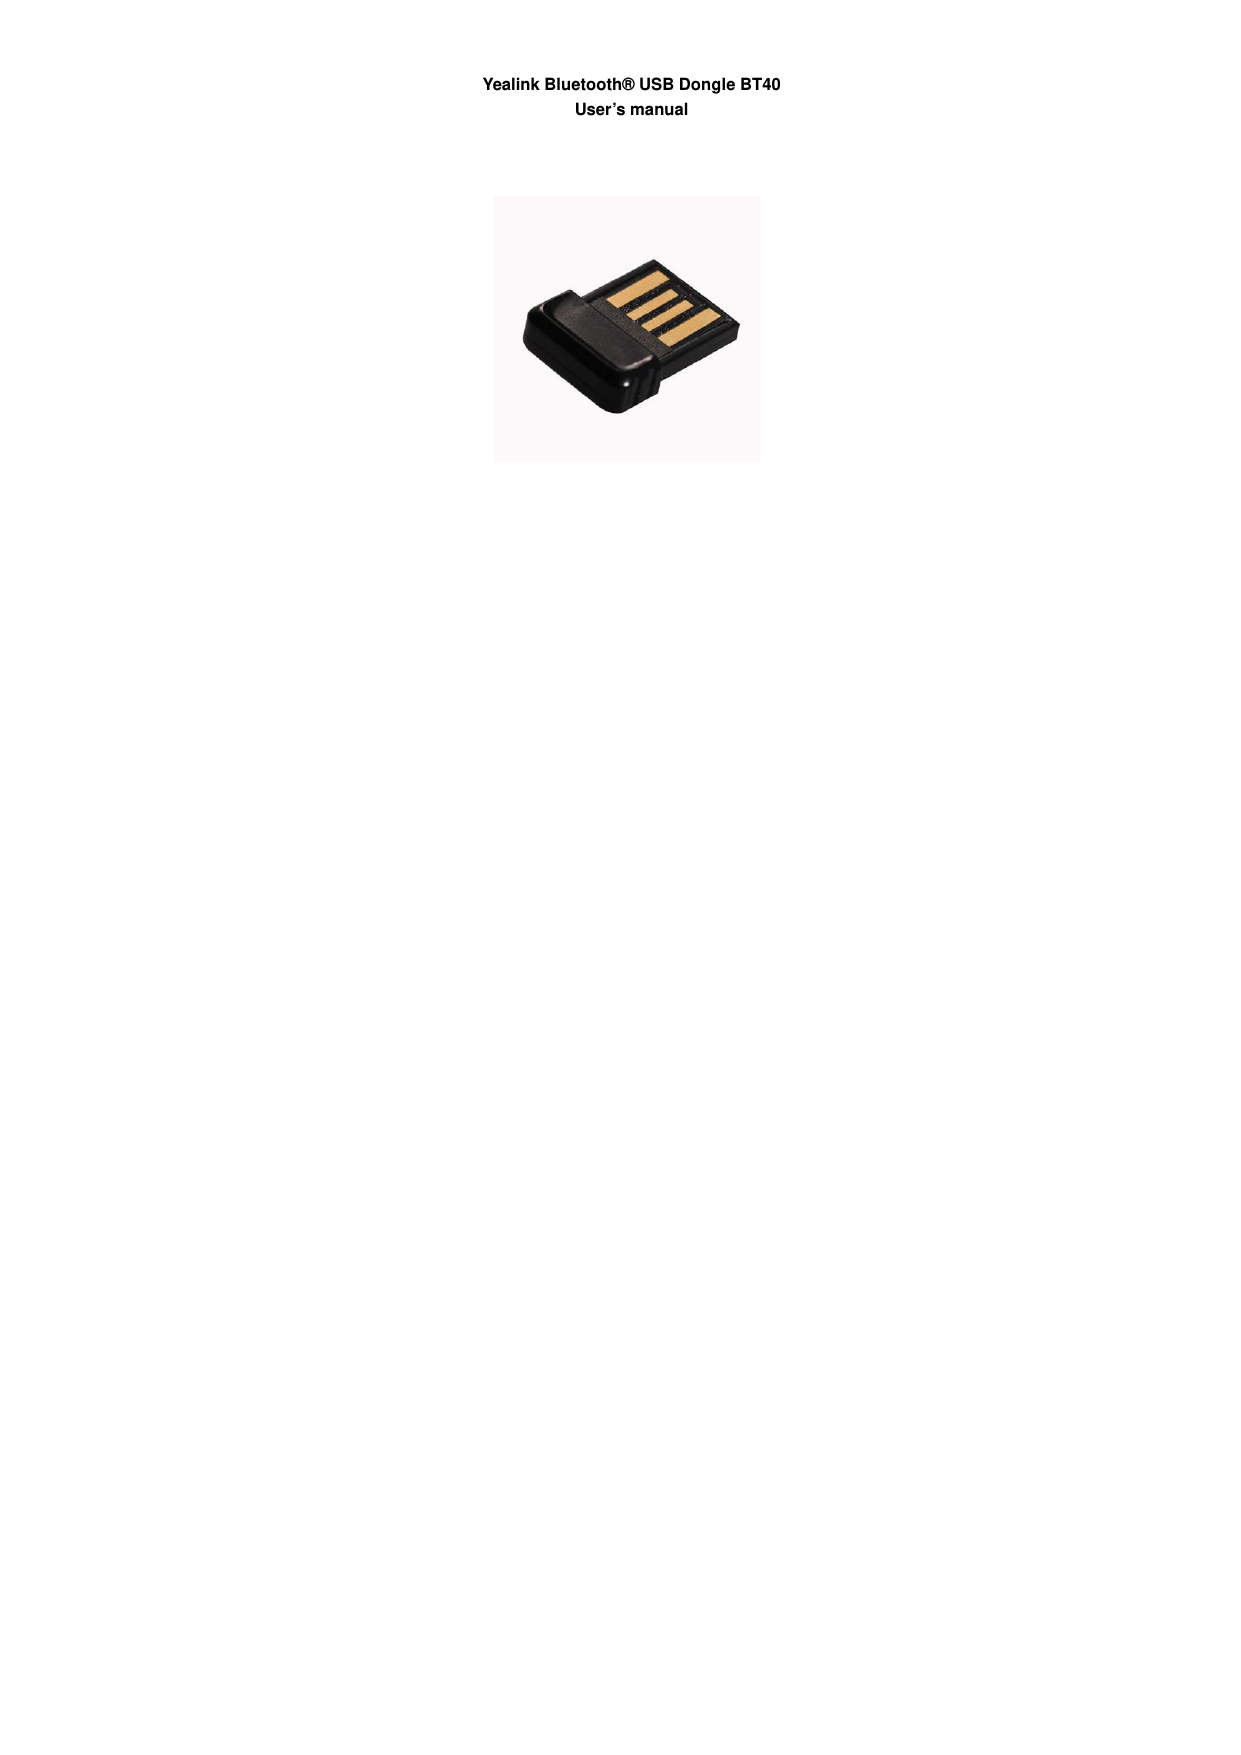   Yealink Bluetooth® USB Dongle BT40 User’s manual                                    